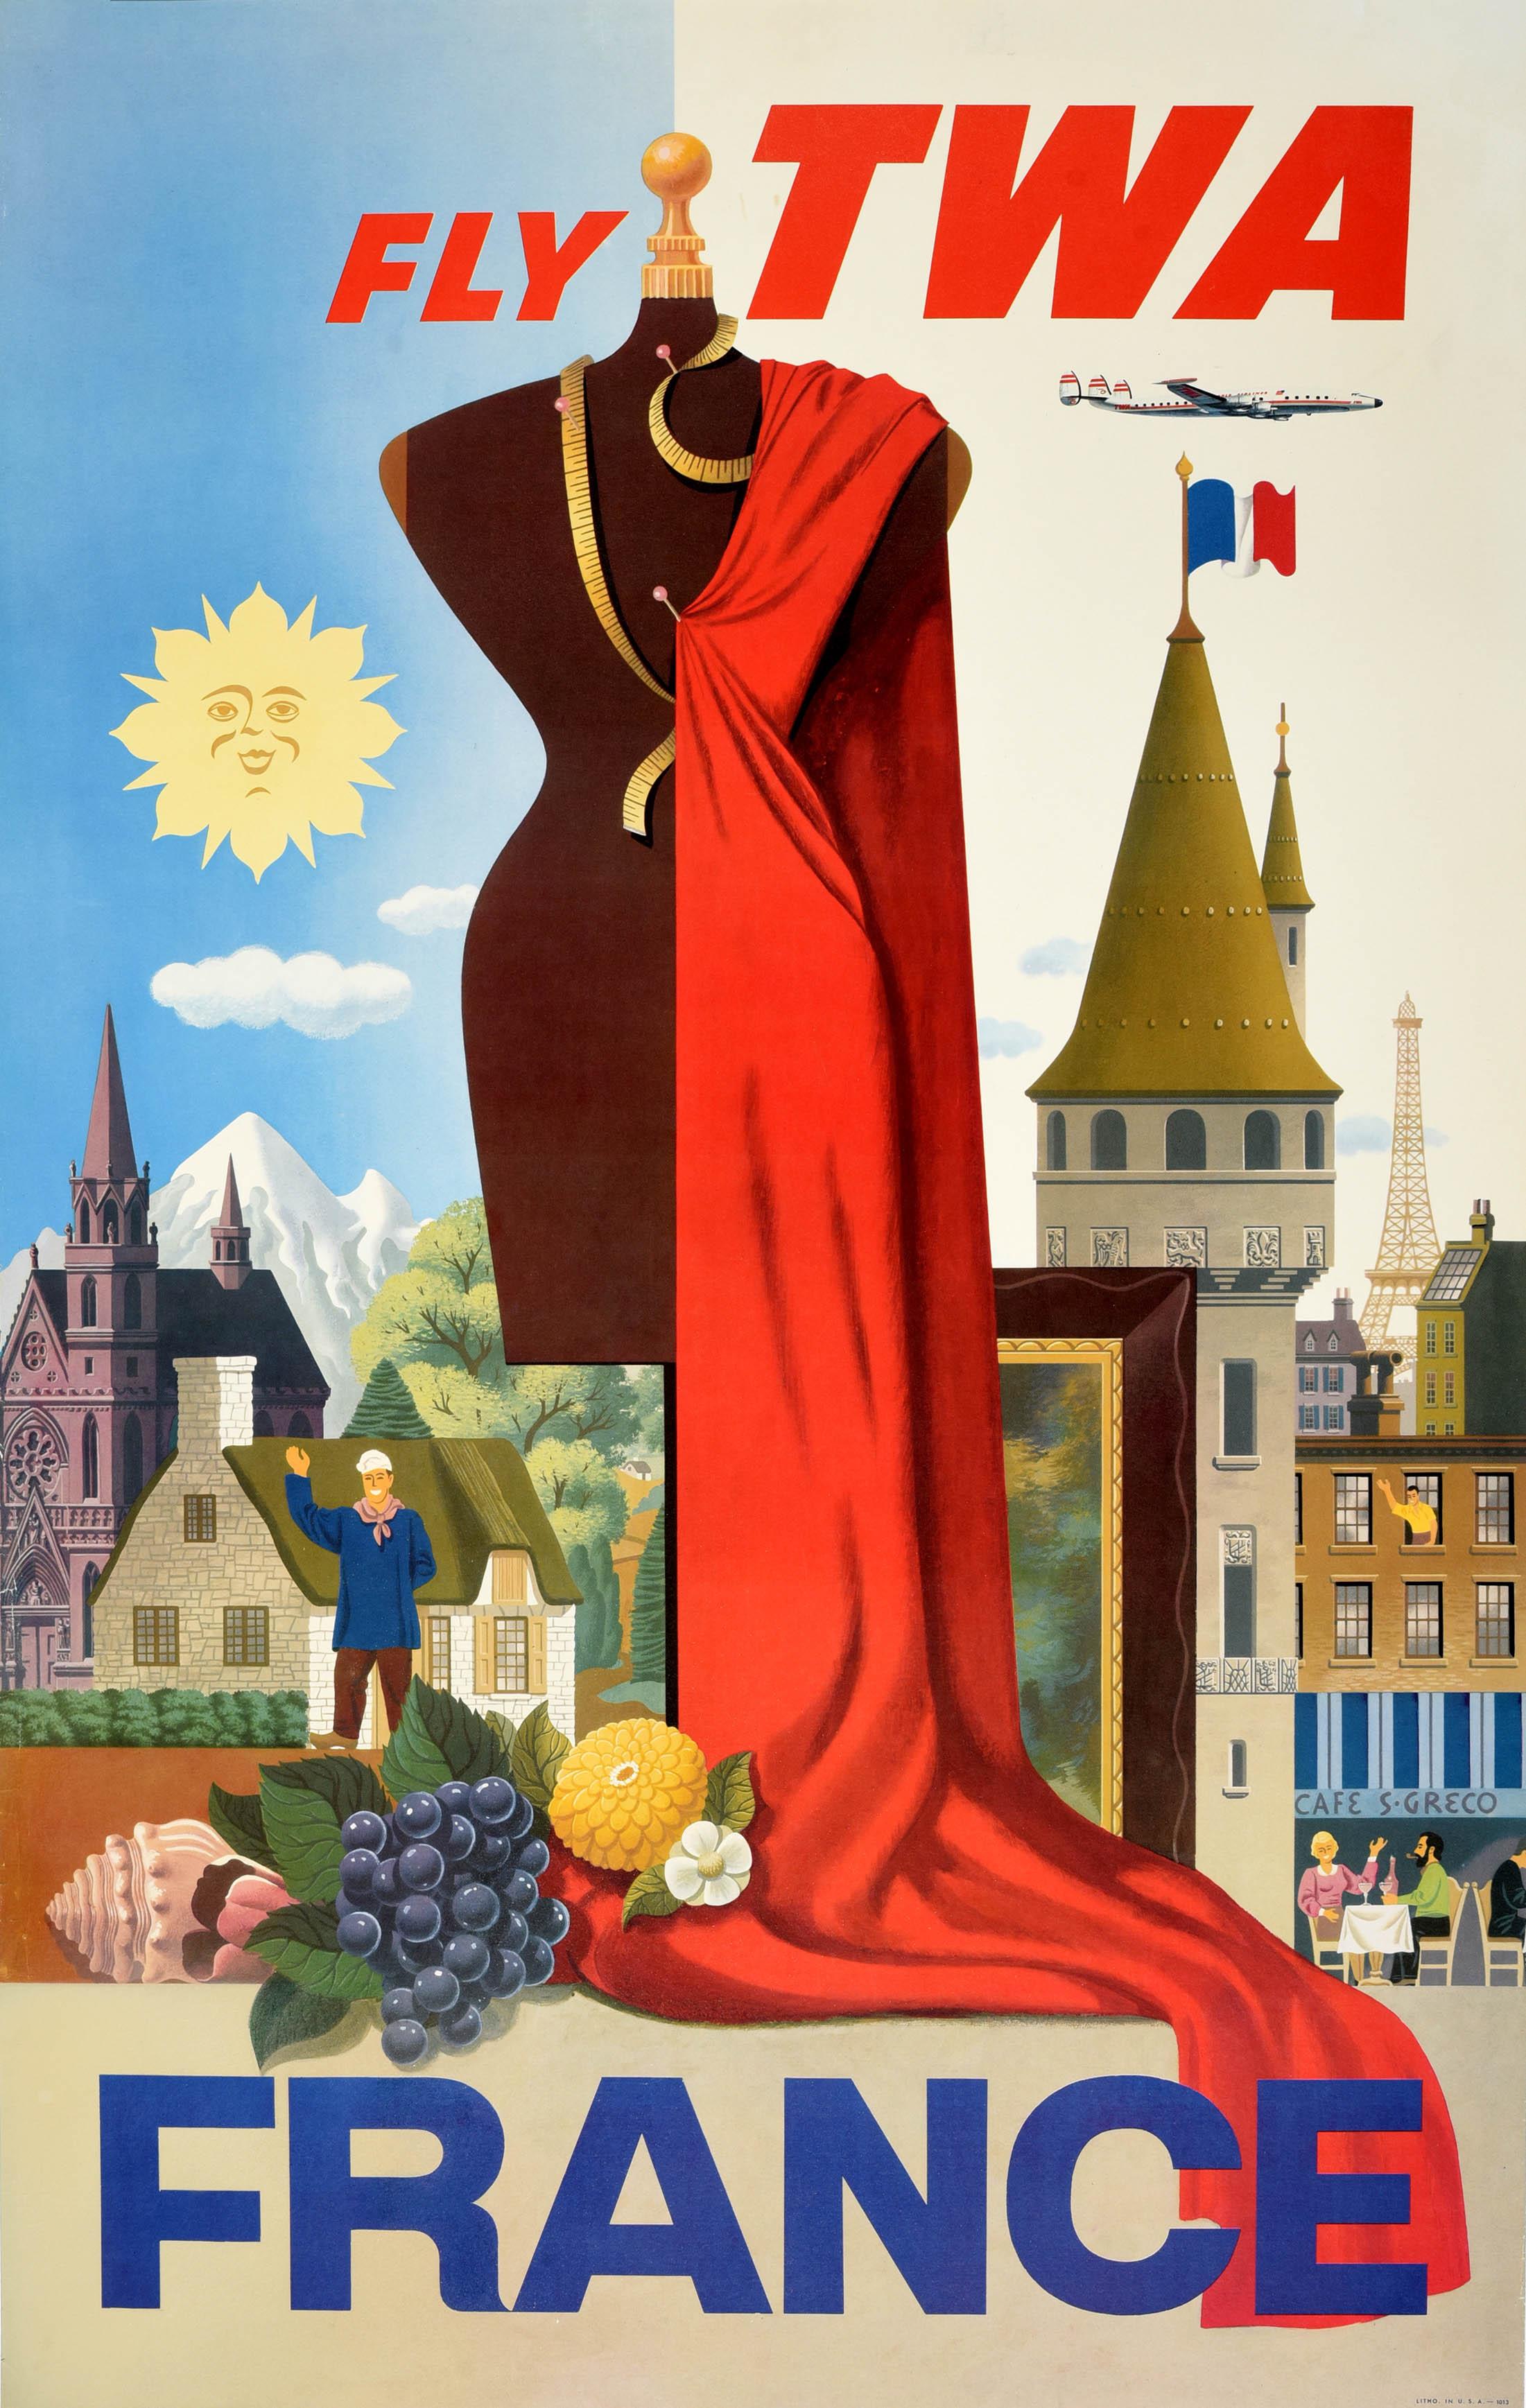 S Greco Print - Original Vintage Travel Poster France Fly TWA Lockheed Constellation Fashion Art